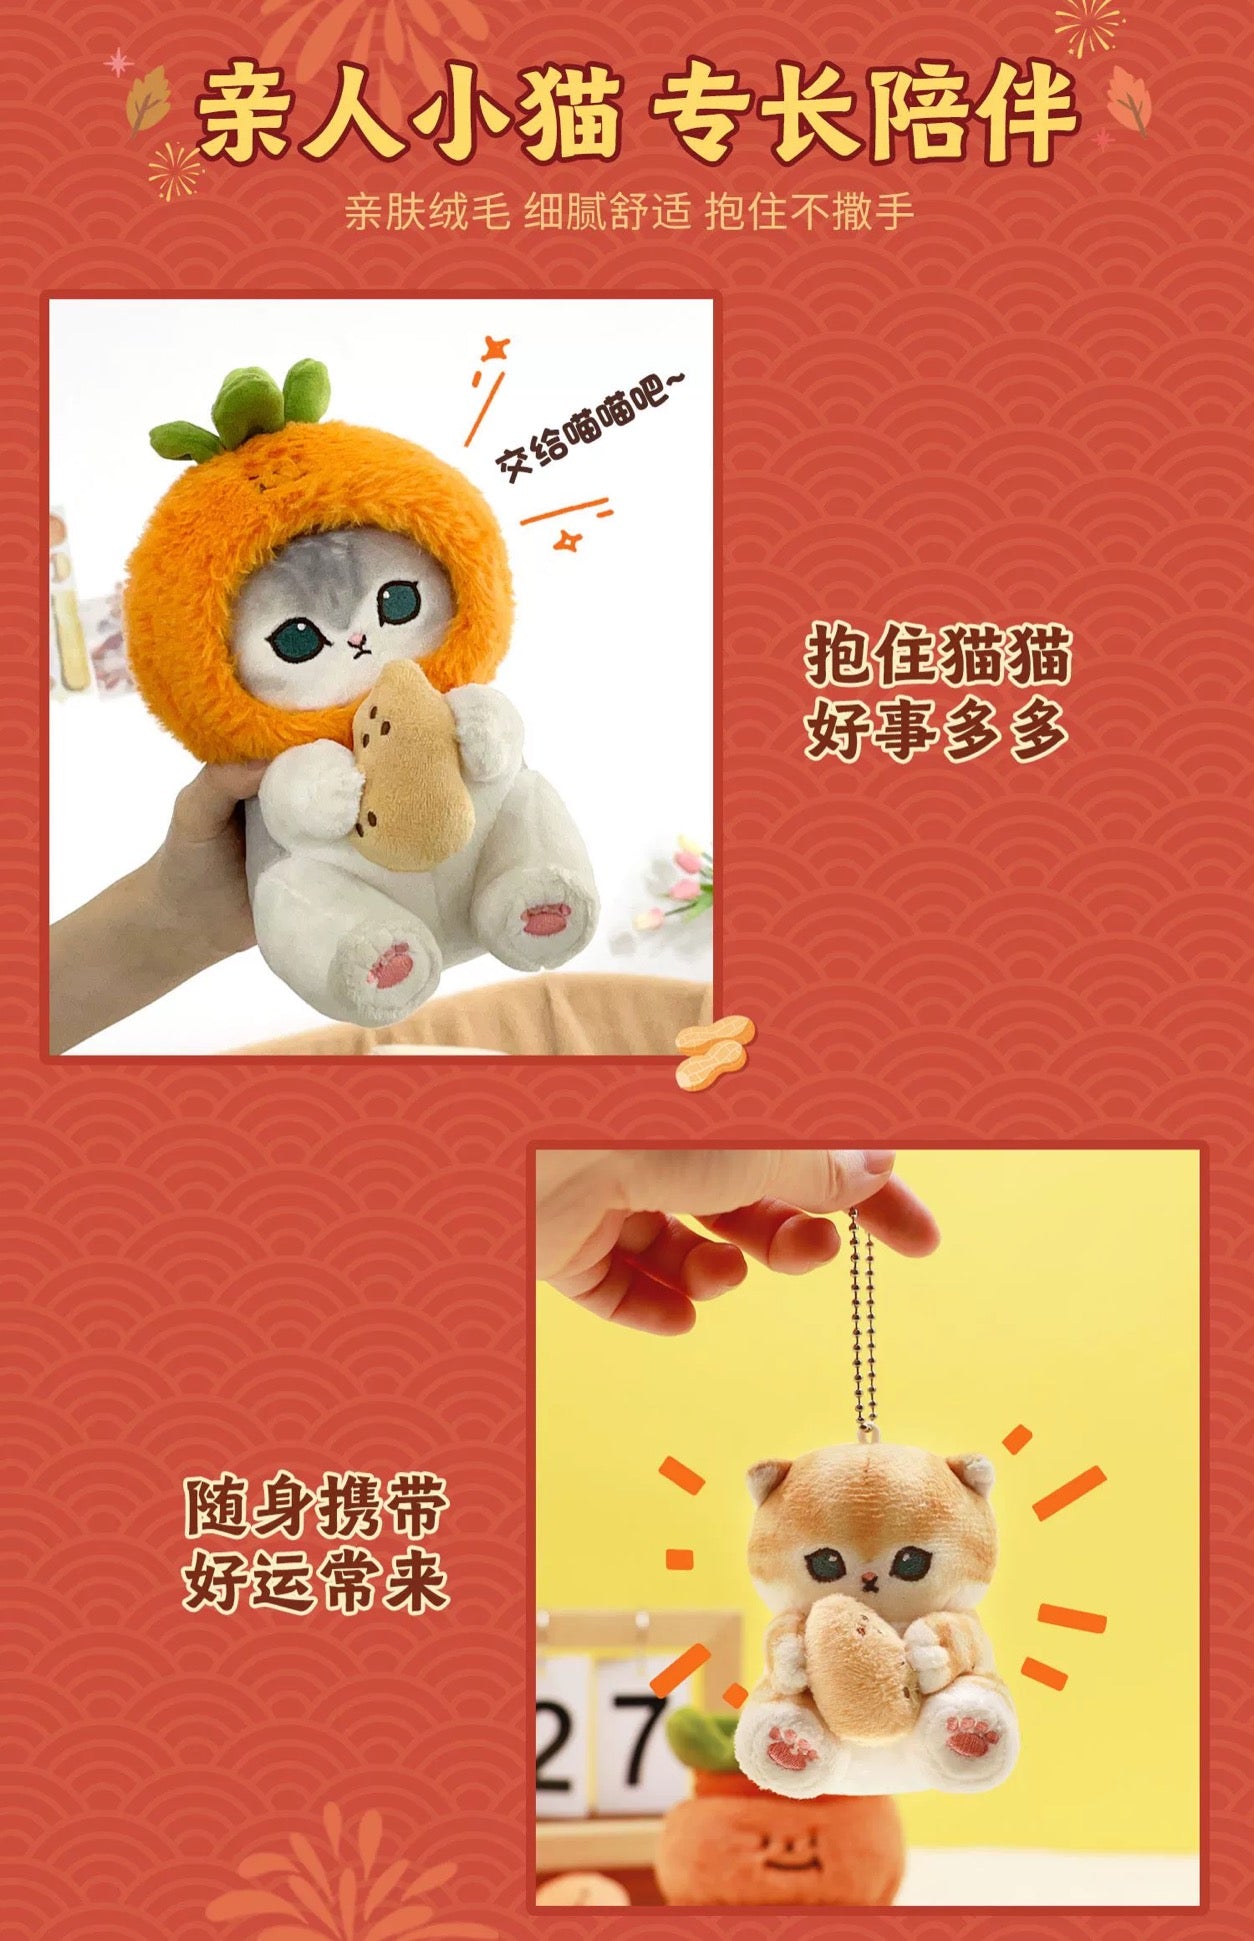 Japan Artist Mofusand Cat Neko Chinese Good Fortune Style | 10cm 19cm 30cm - Mascot Plush Doll Keychain